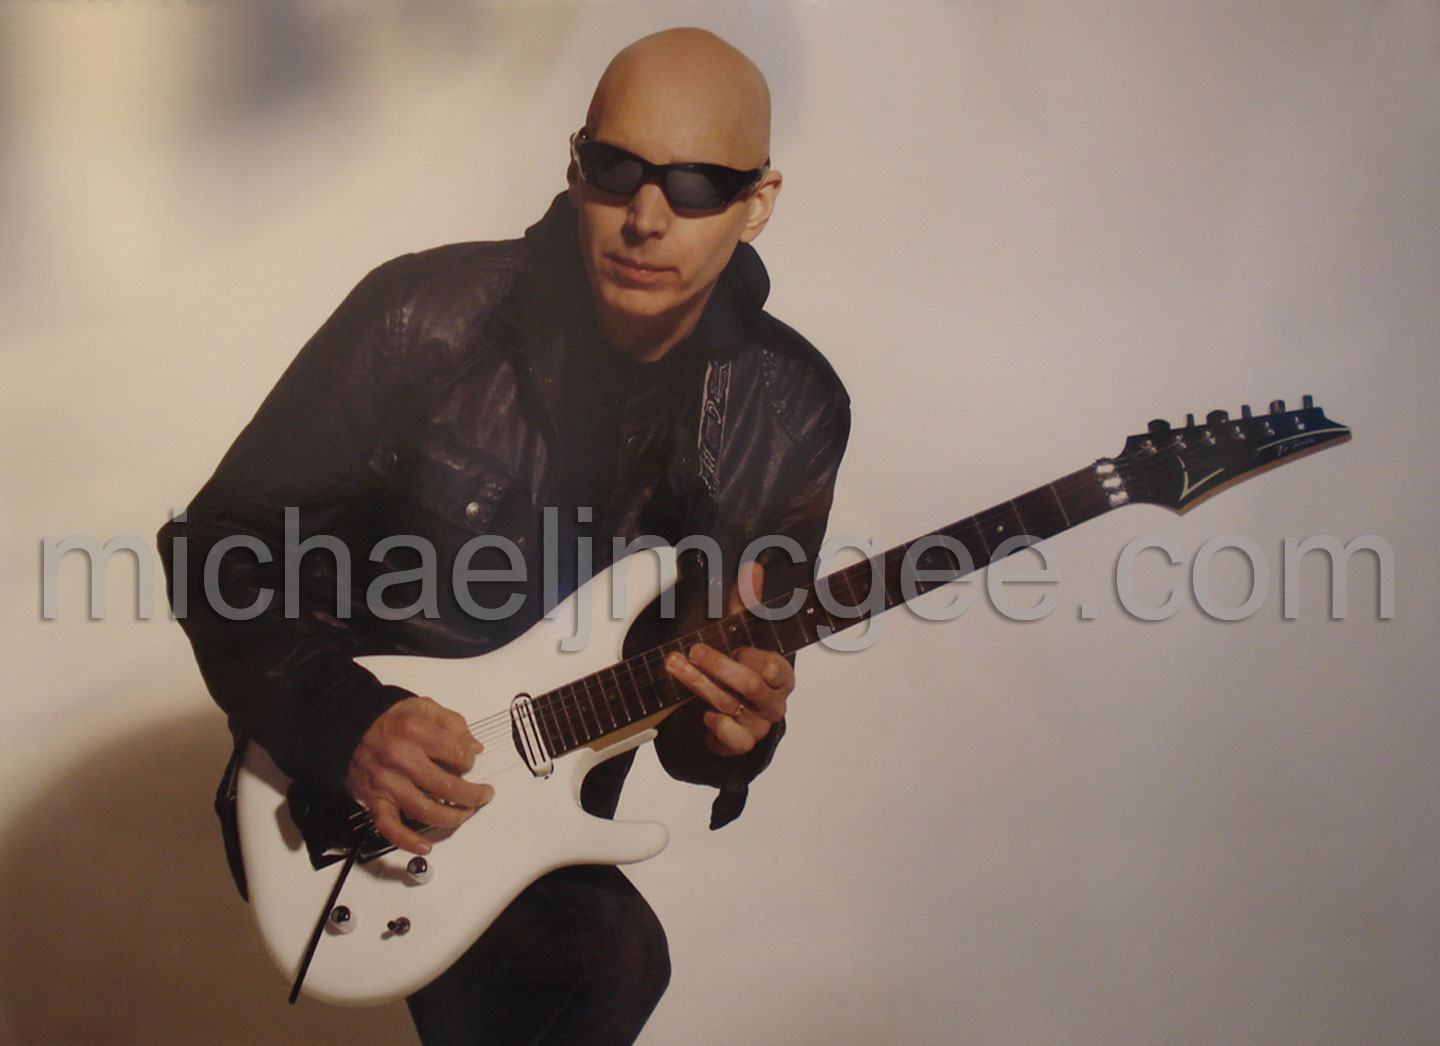 Joe Satriani / michaeljmcgee.com